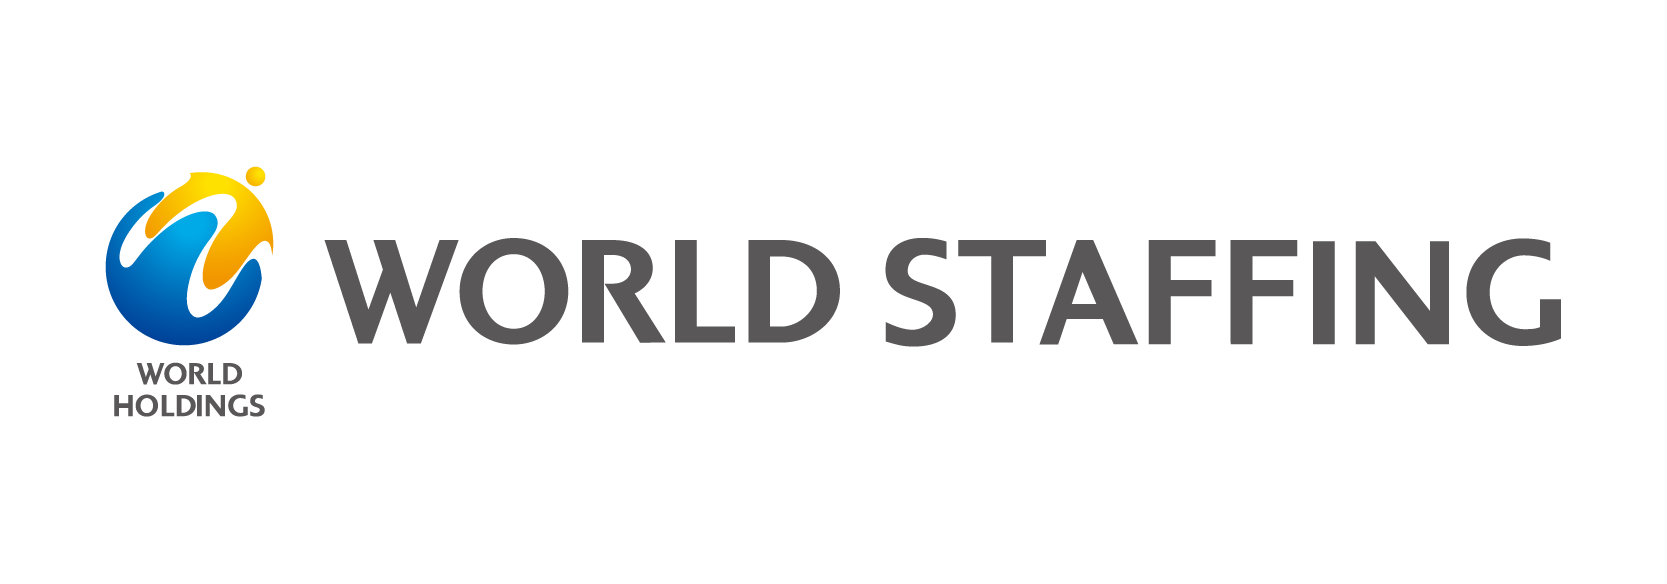 WORLD STAFFING CO., LTD.